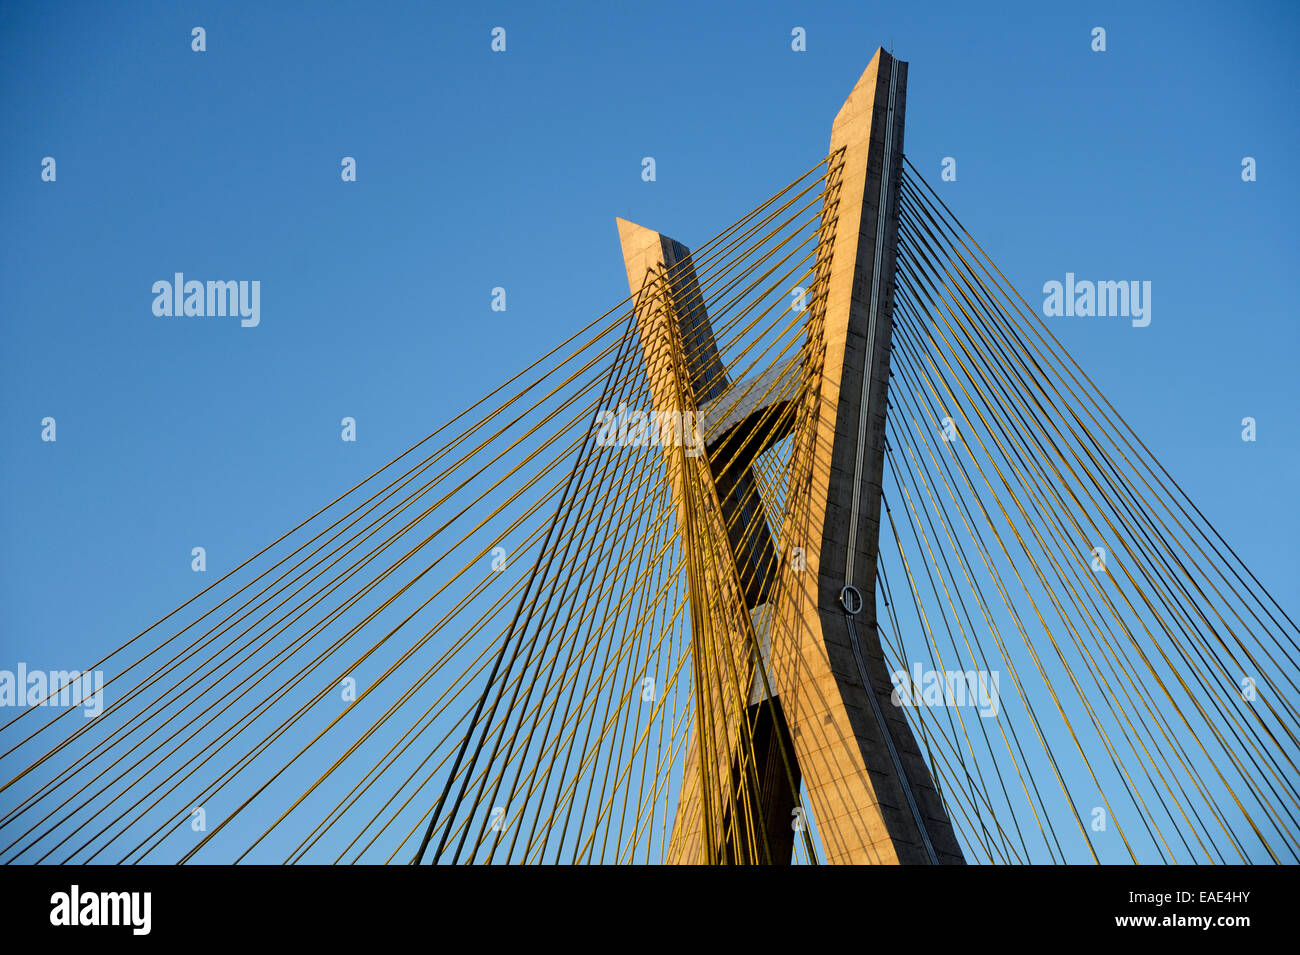 Detalle de la Octávio Frias de Oliveira, puente colgante, el Morumbi, Sao Paulo, Sao Paulo, Brasil Foto de stock